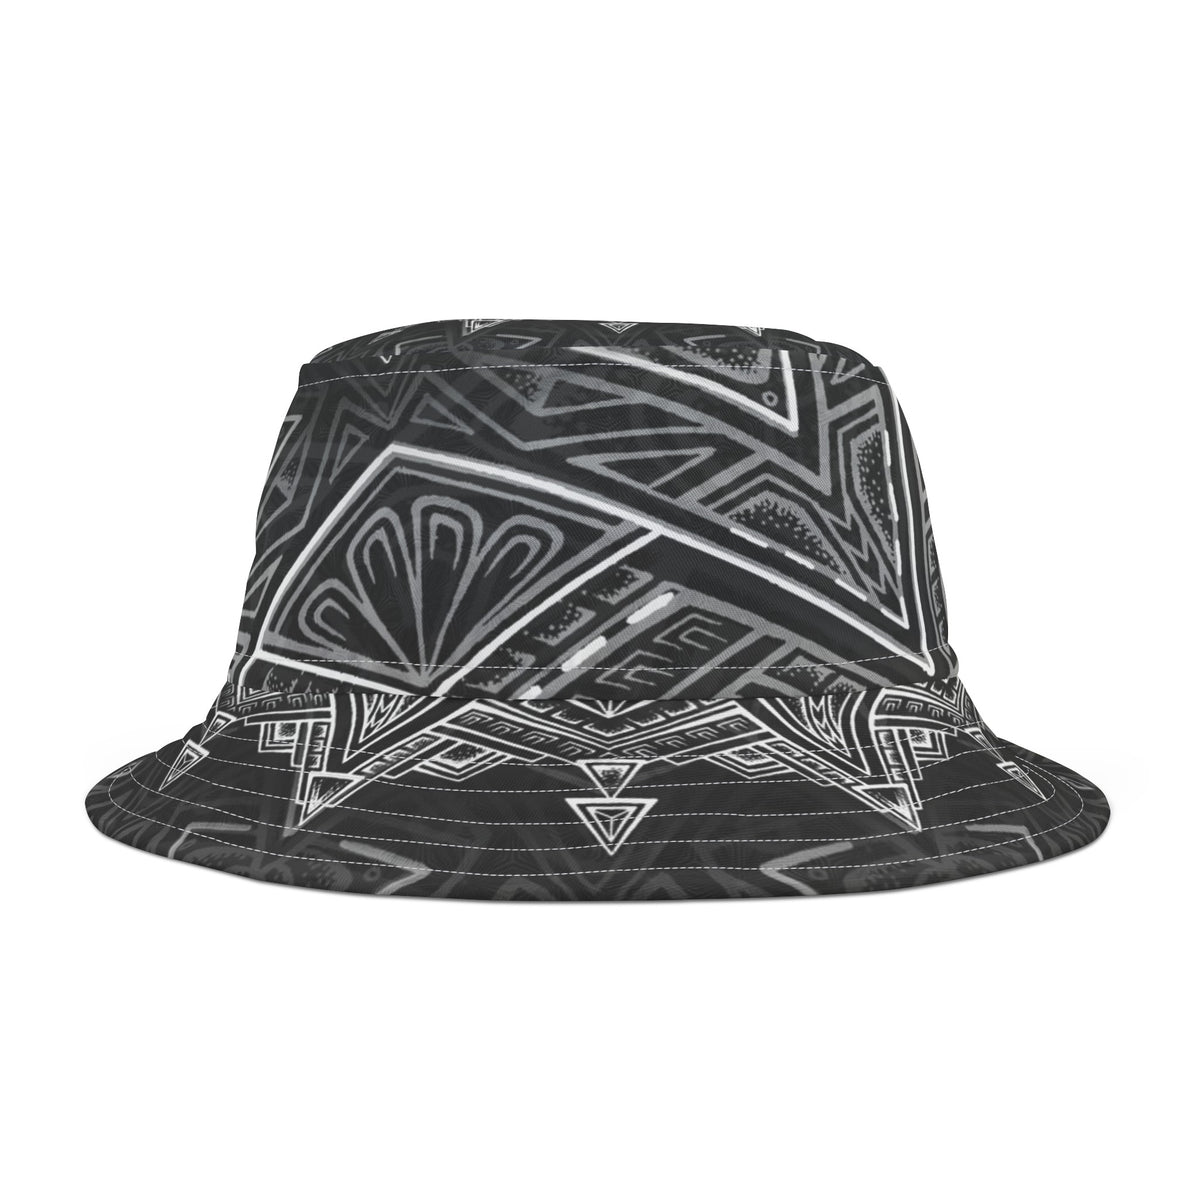 Star Tetrahedron - Bucket Hat